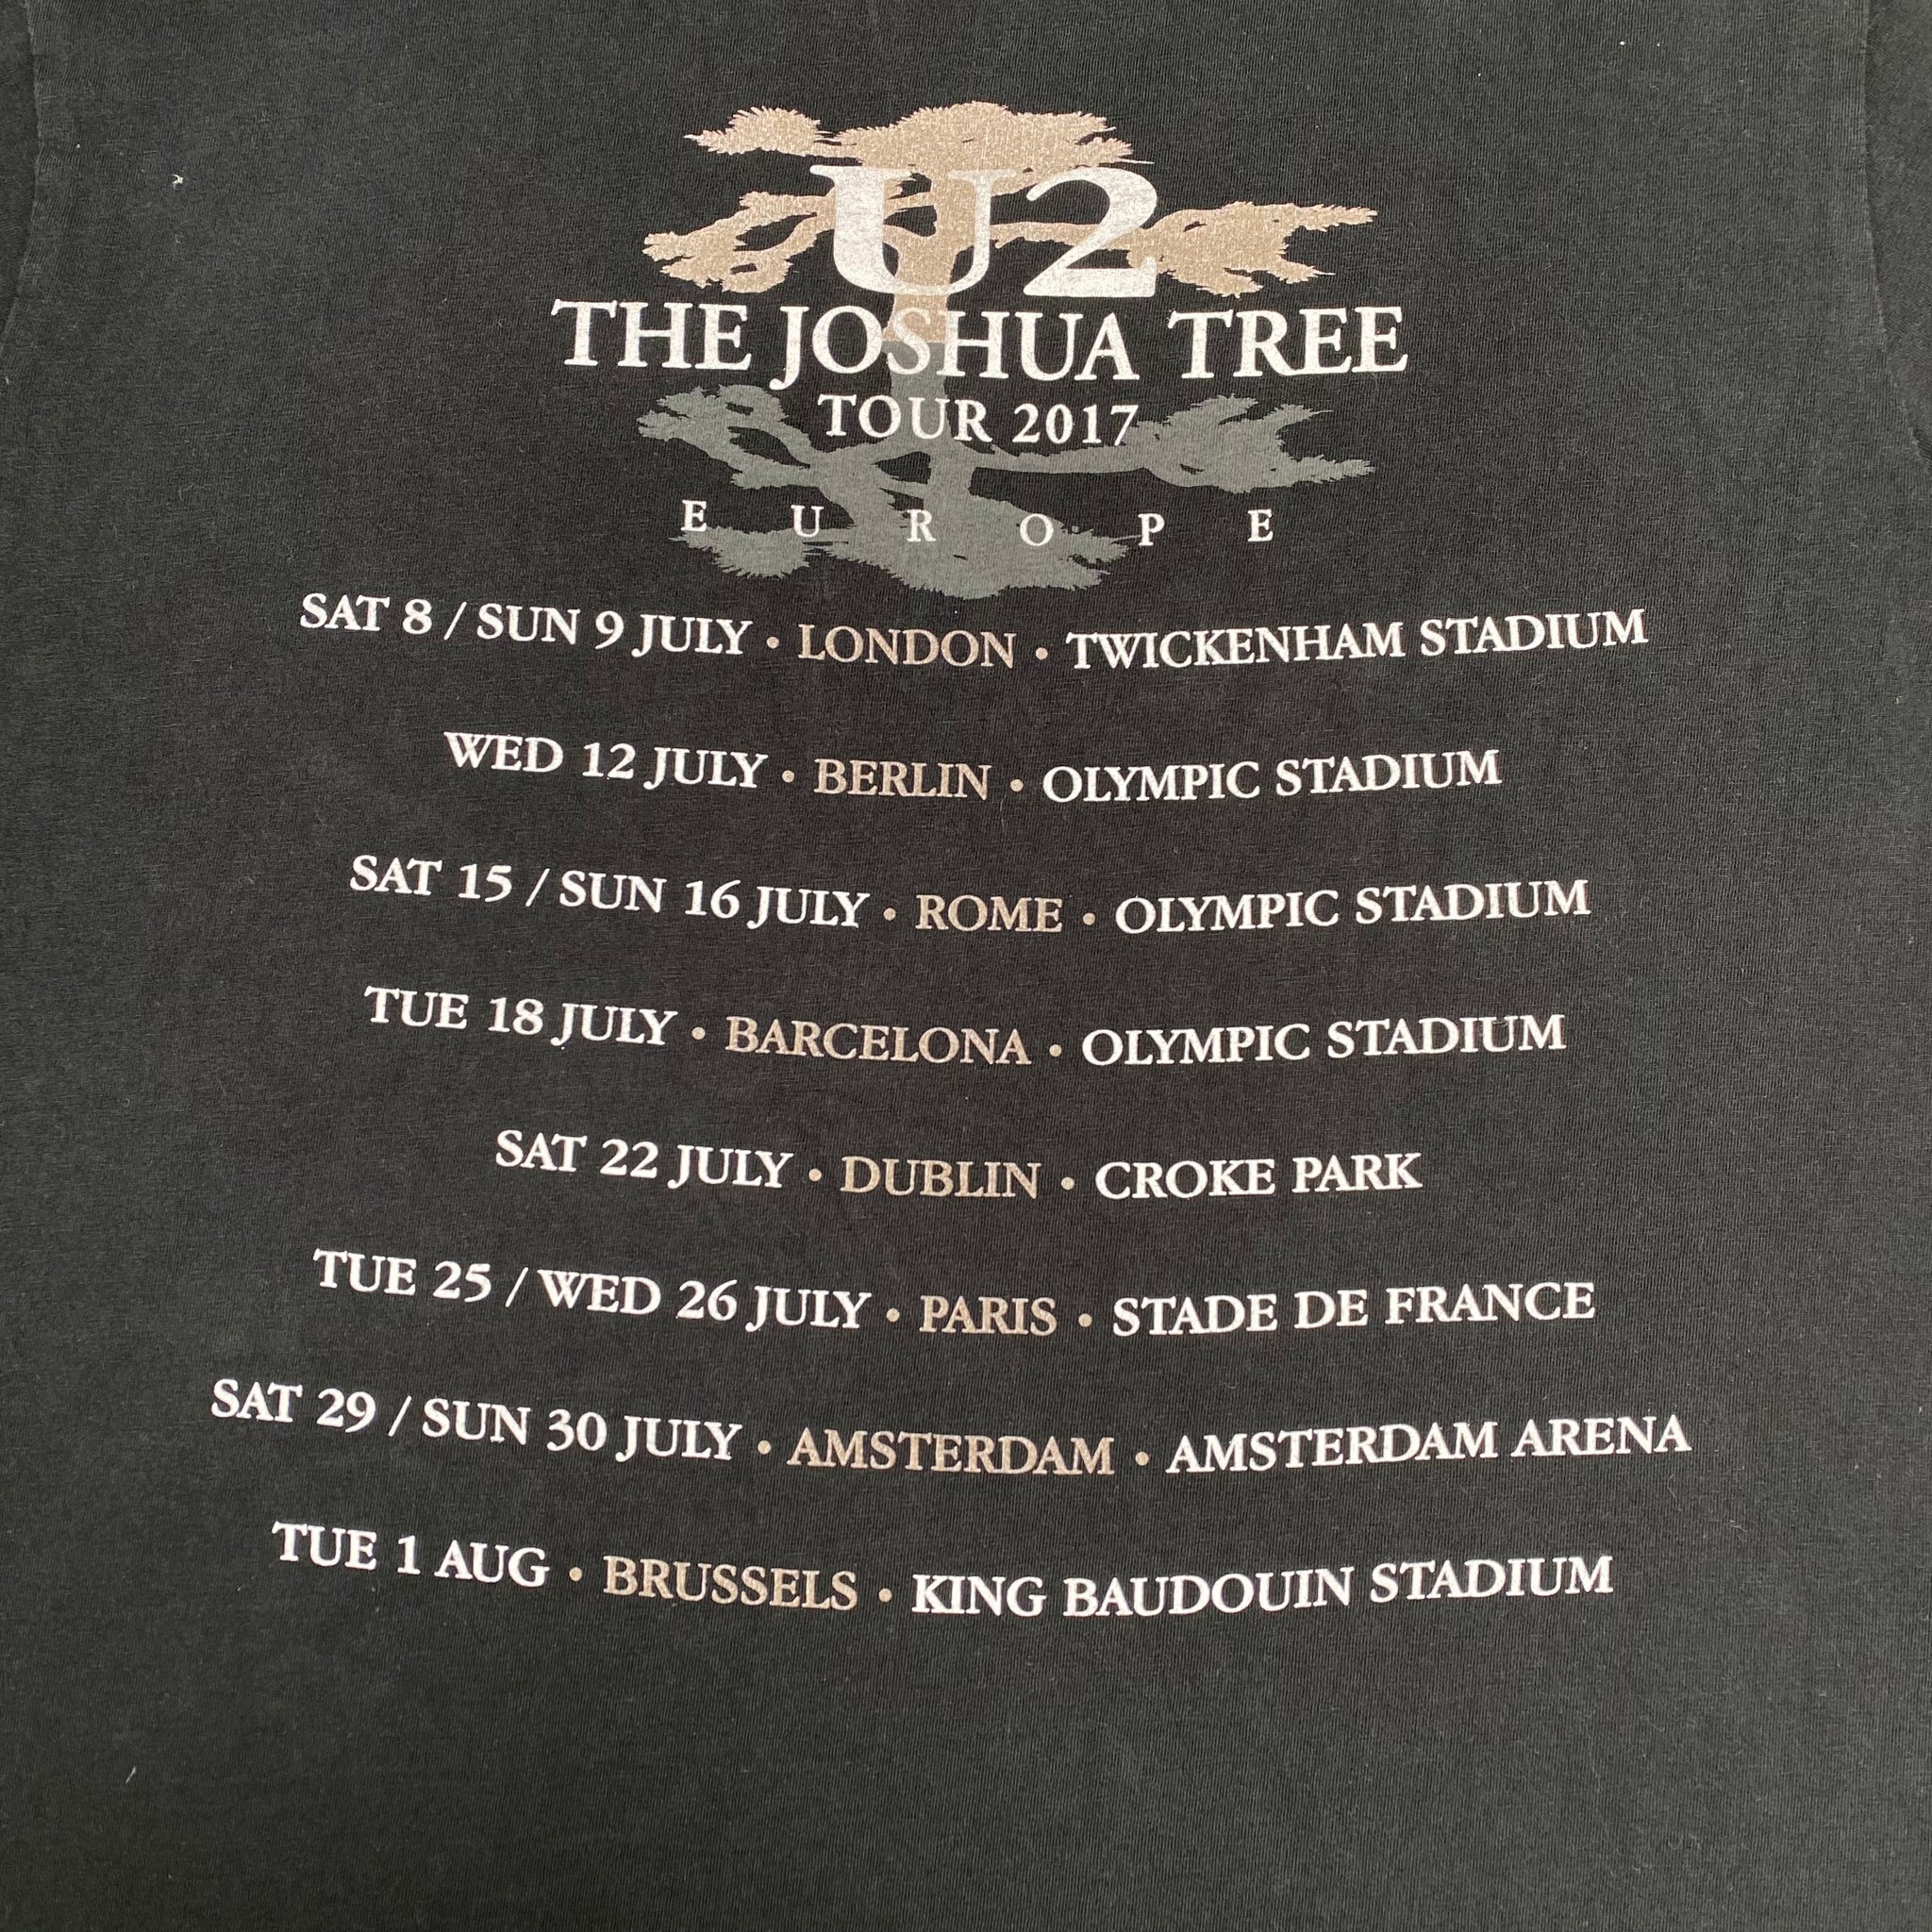 u2 the joshua tree tour 2017 july 1